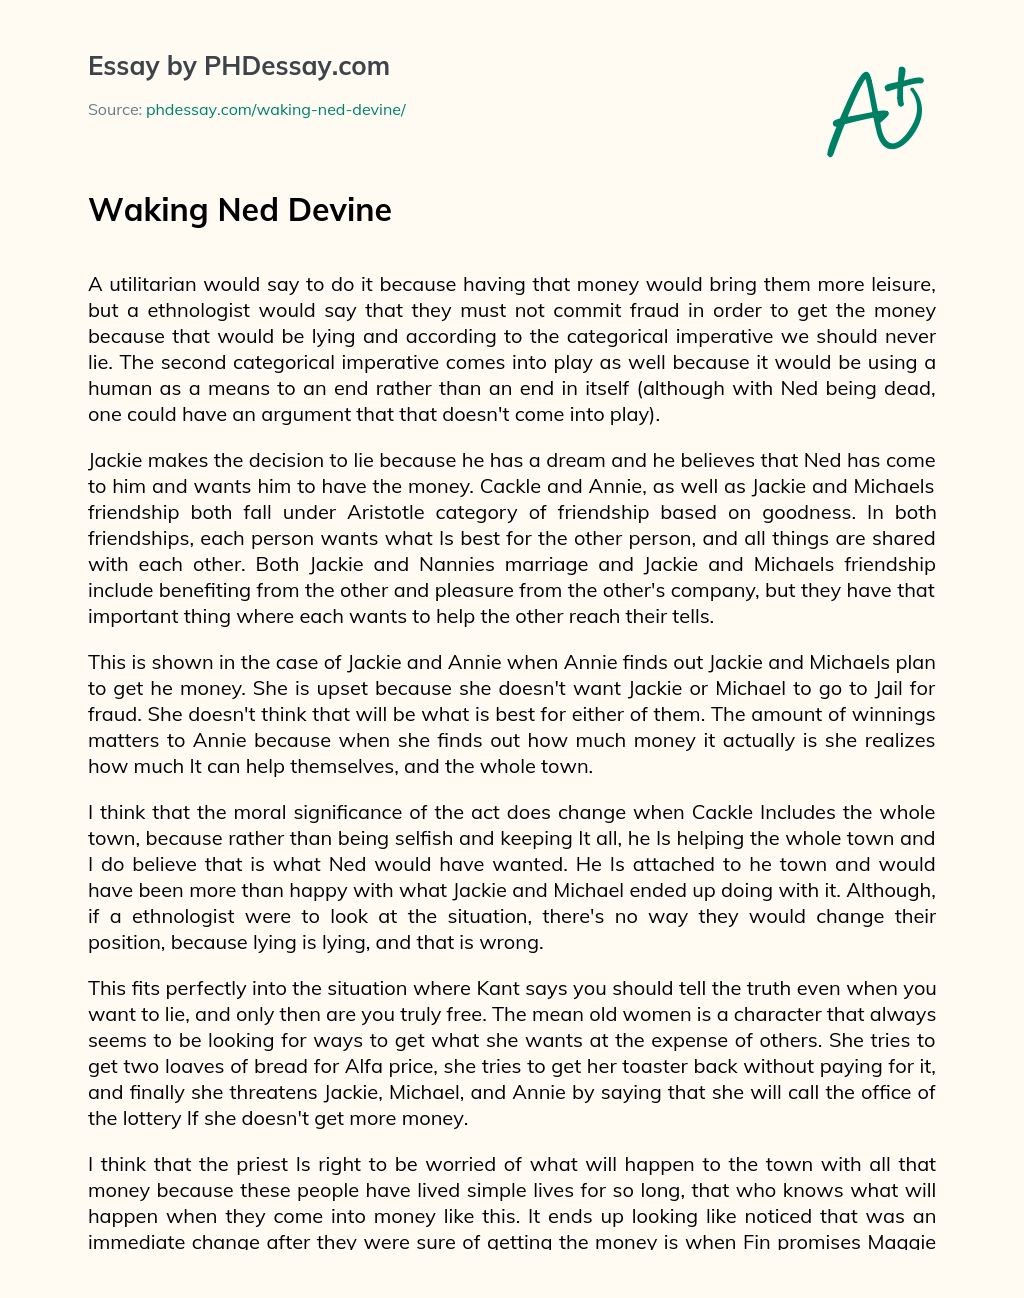 Waking Ned Devine essay